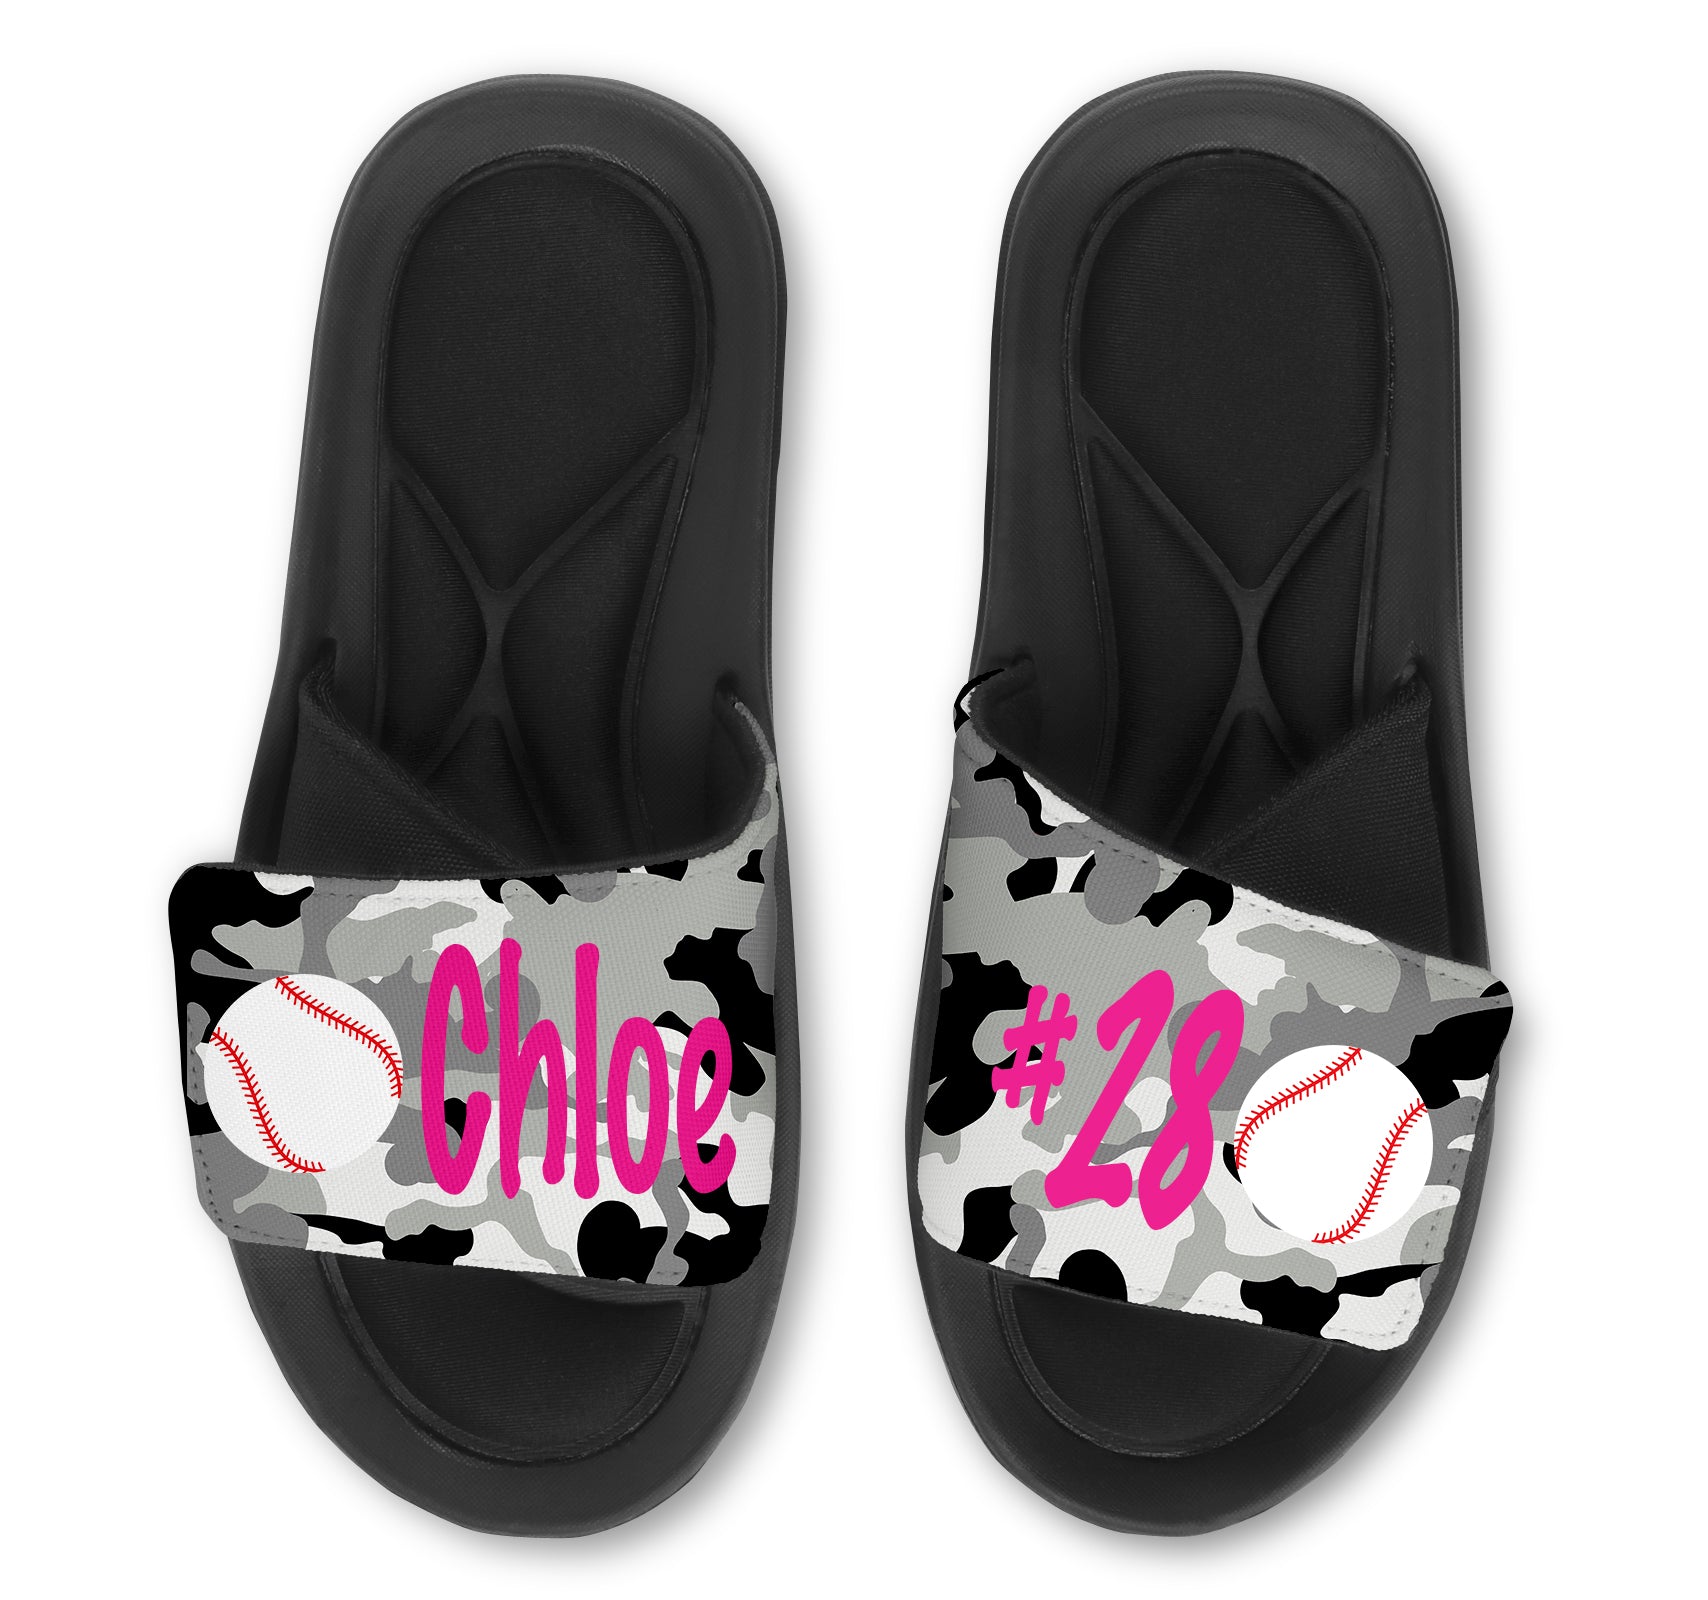 Baseball Custom Slides / Sandals - Camo